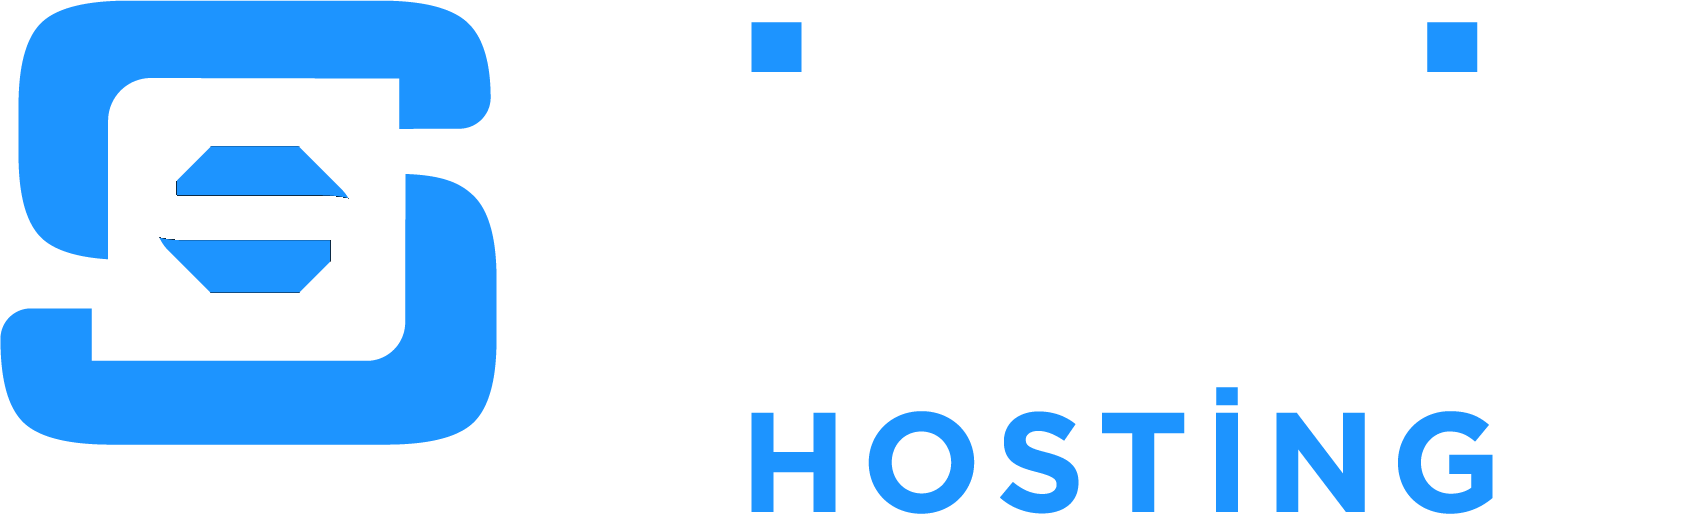 Siberia logo light